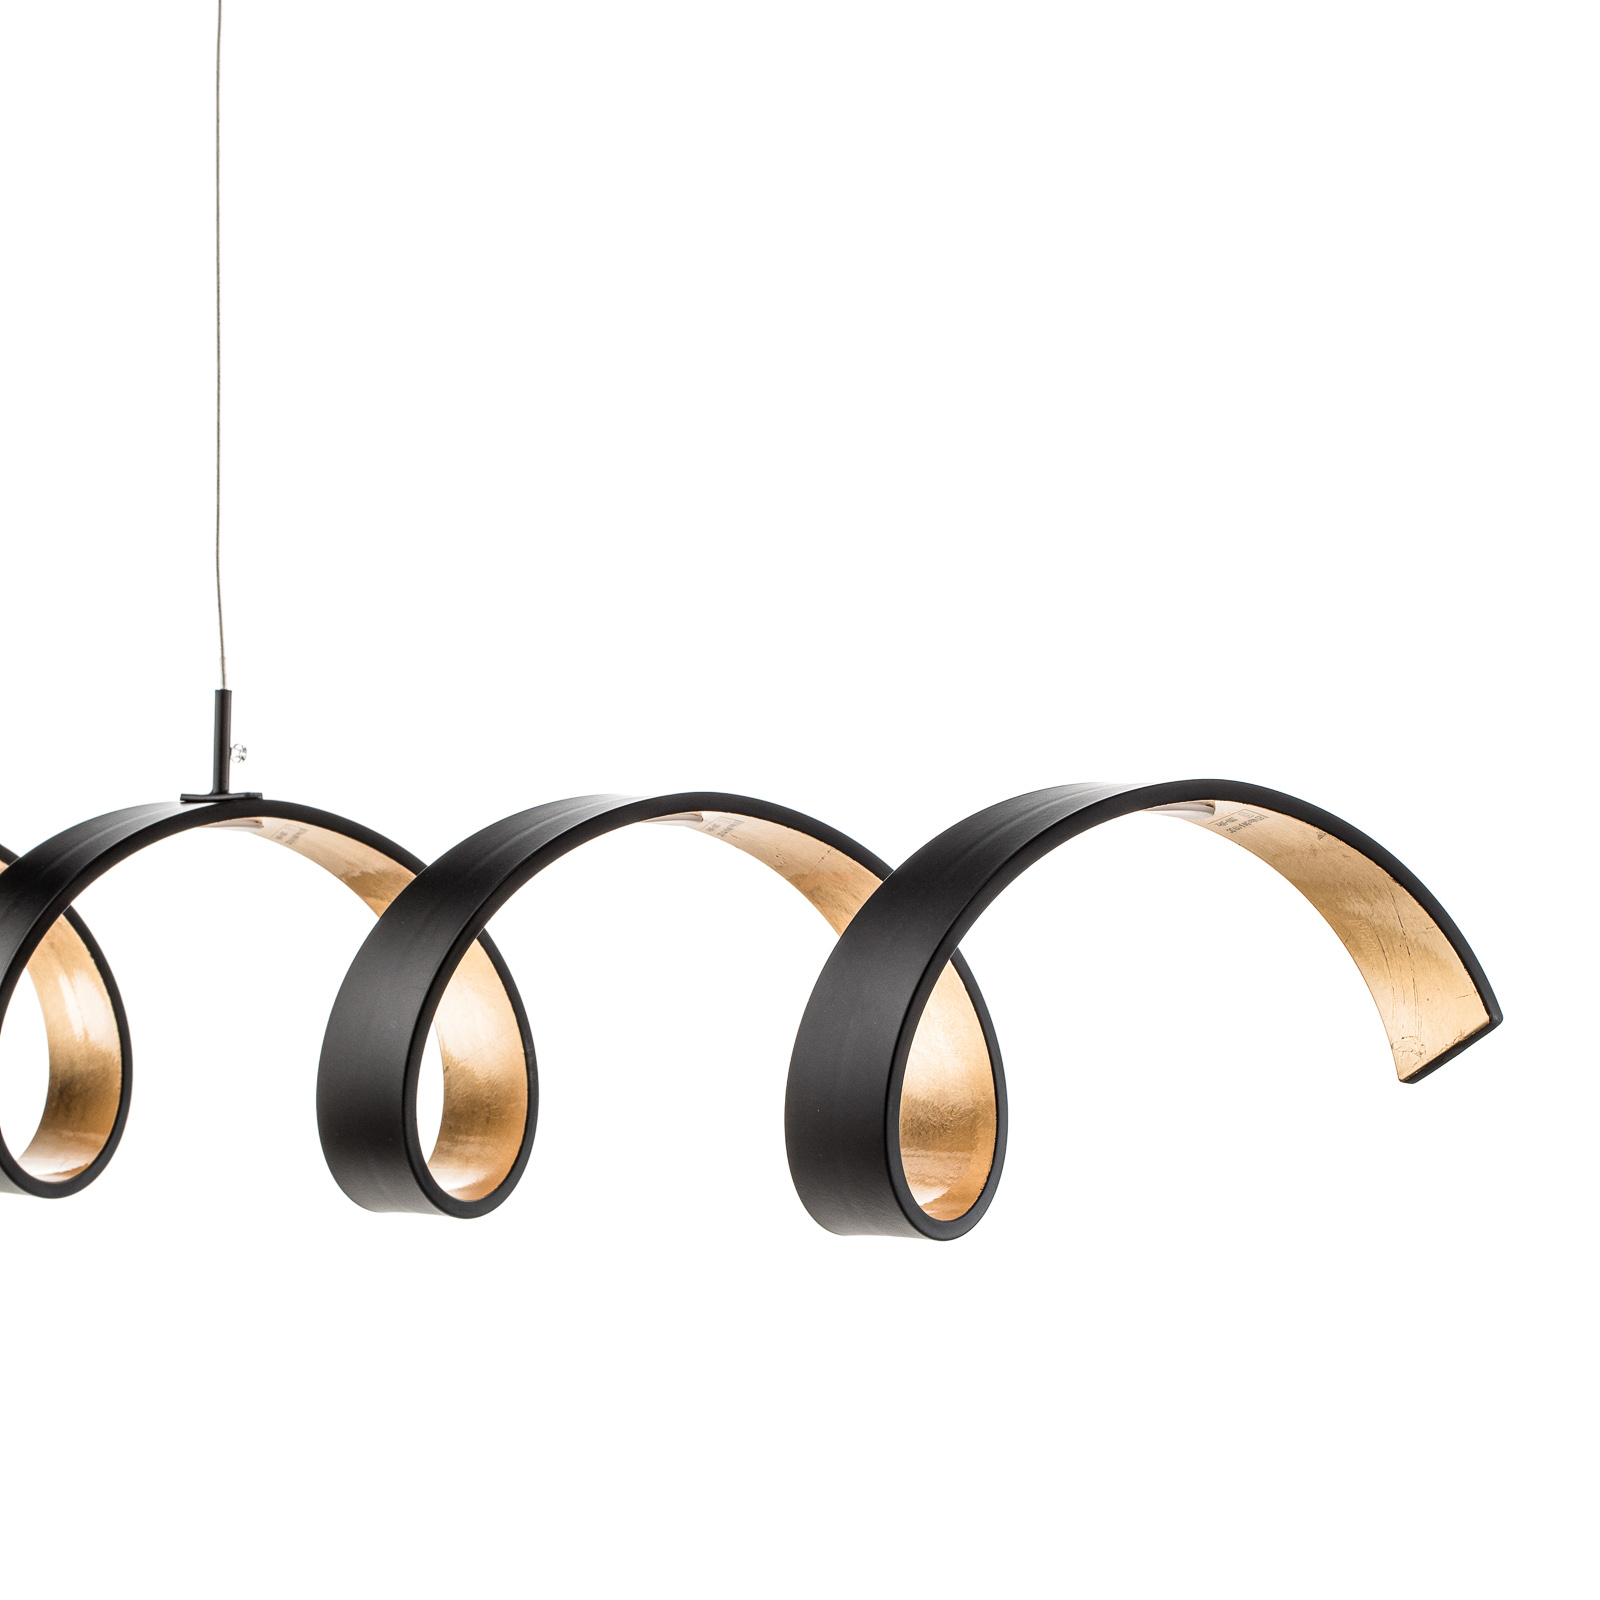 LED hanglamp Helix, zwart-goud, 125 cm